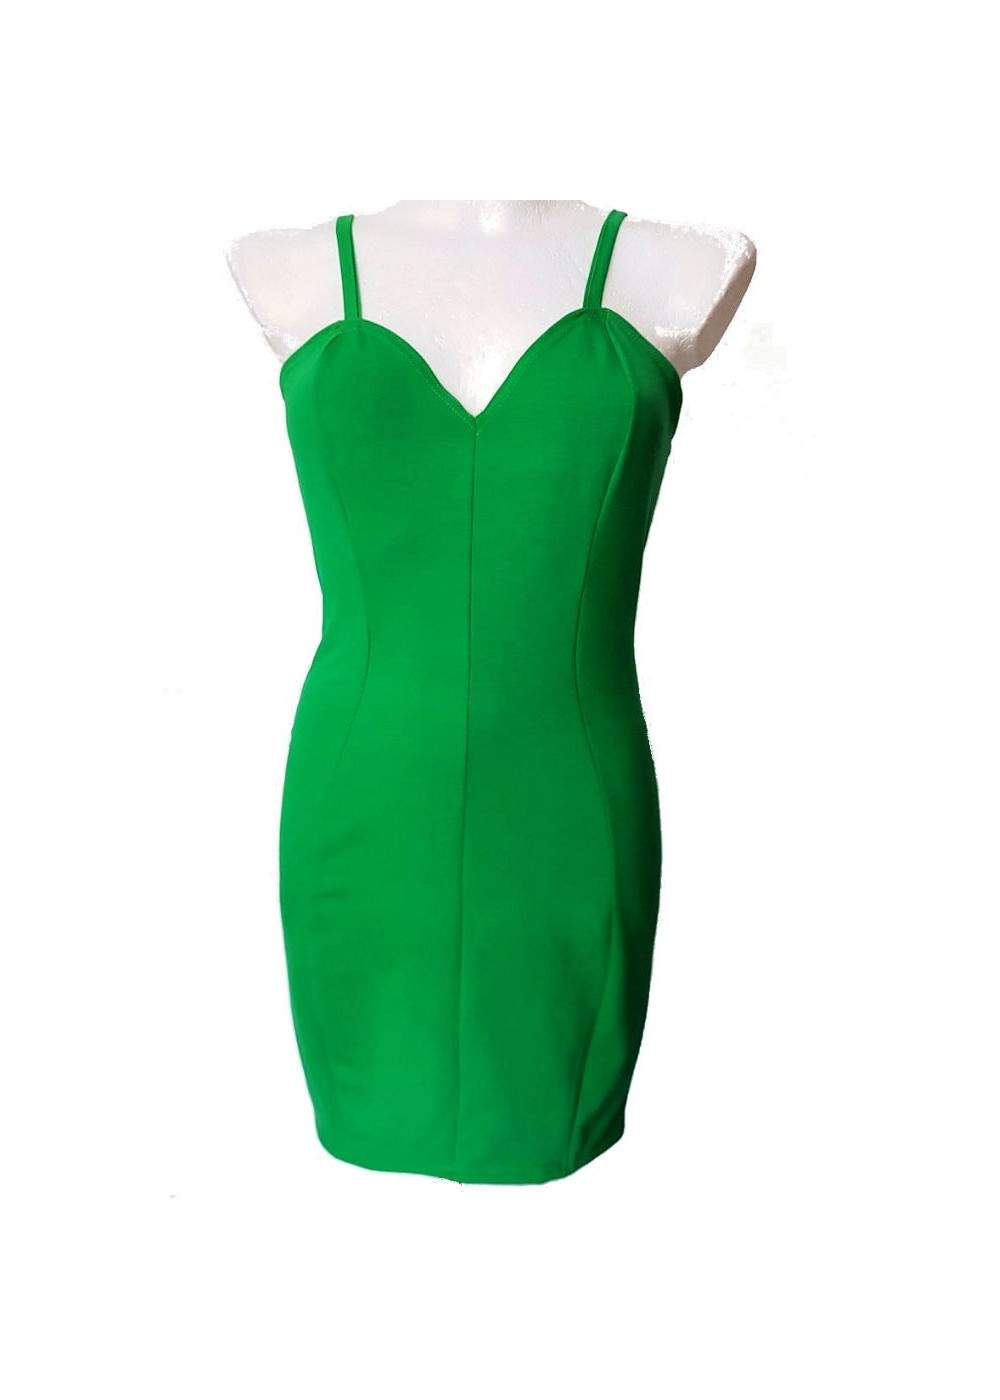 Green Stretch Cotton Strap Dress CockPart Dress Size 34 - 52 35,00 € - 